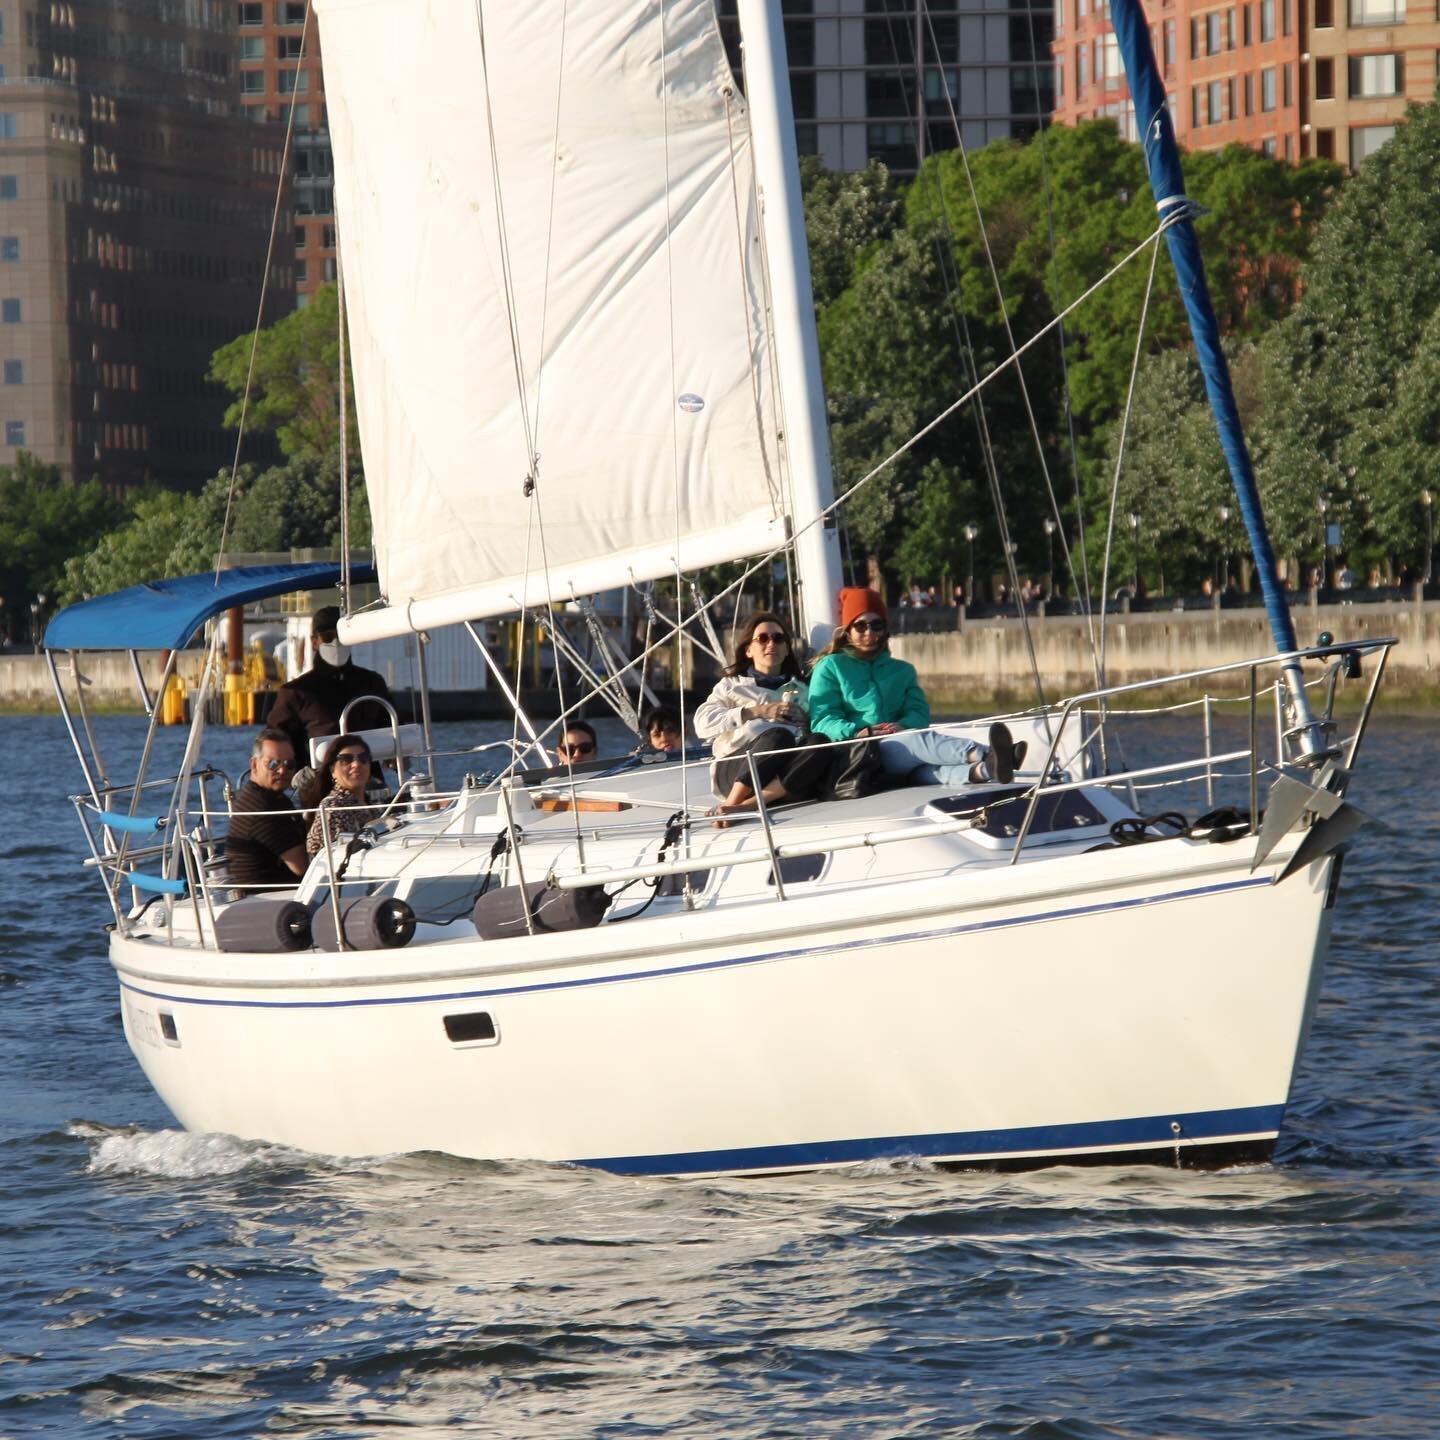 ⛵️✨🇺🇸 
.
.
.
.
.
Photo: @nyc__by__boat 
#BrooklynSail #BKsail #Enchantress #EnchantressSailboat #EnchantressNYC #SailingNYC #NYCSailing #SailboatNYC #NYCSailboat #SailingNewYork #NewYorkSailing #SailboatNewYork #NewYorkSailboat #SailingTourNYC #NYC